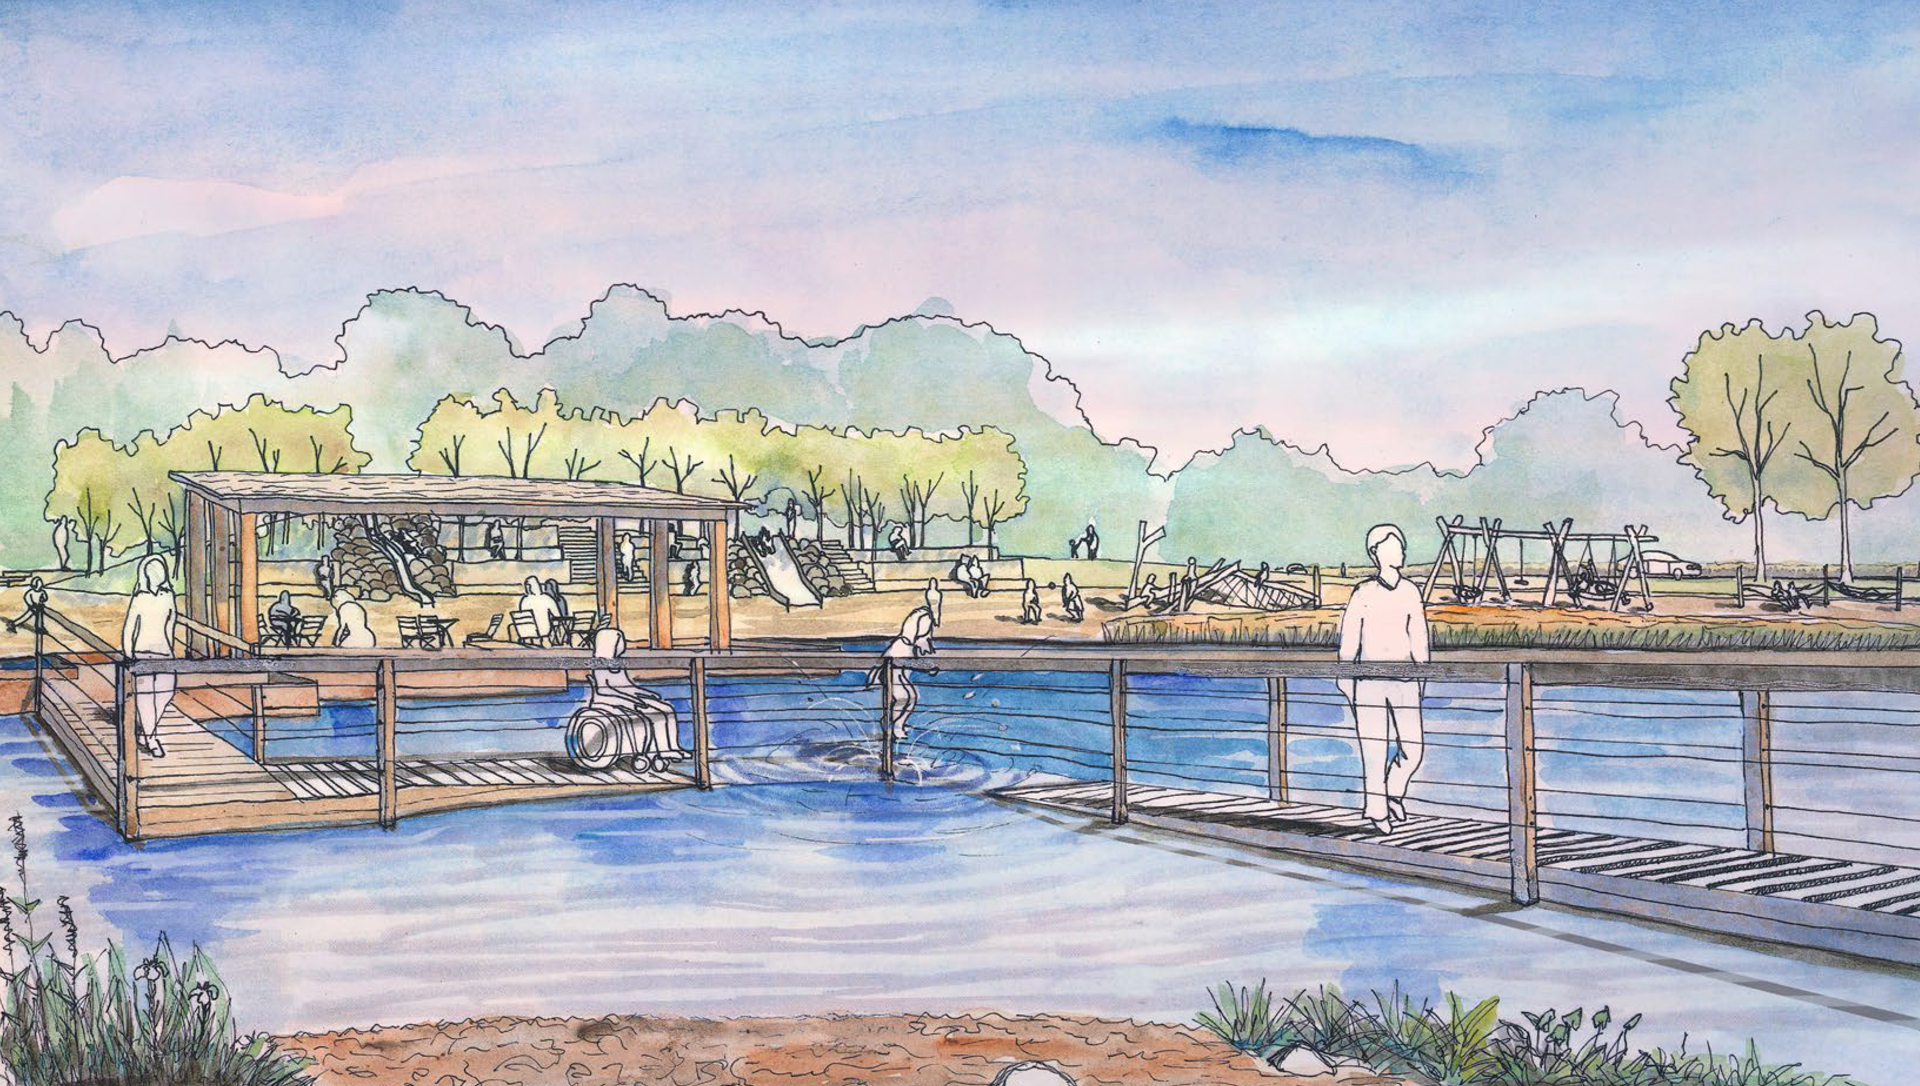 Conceptual drawing of a boardwalk through a wetland